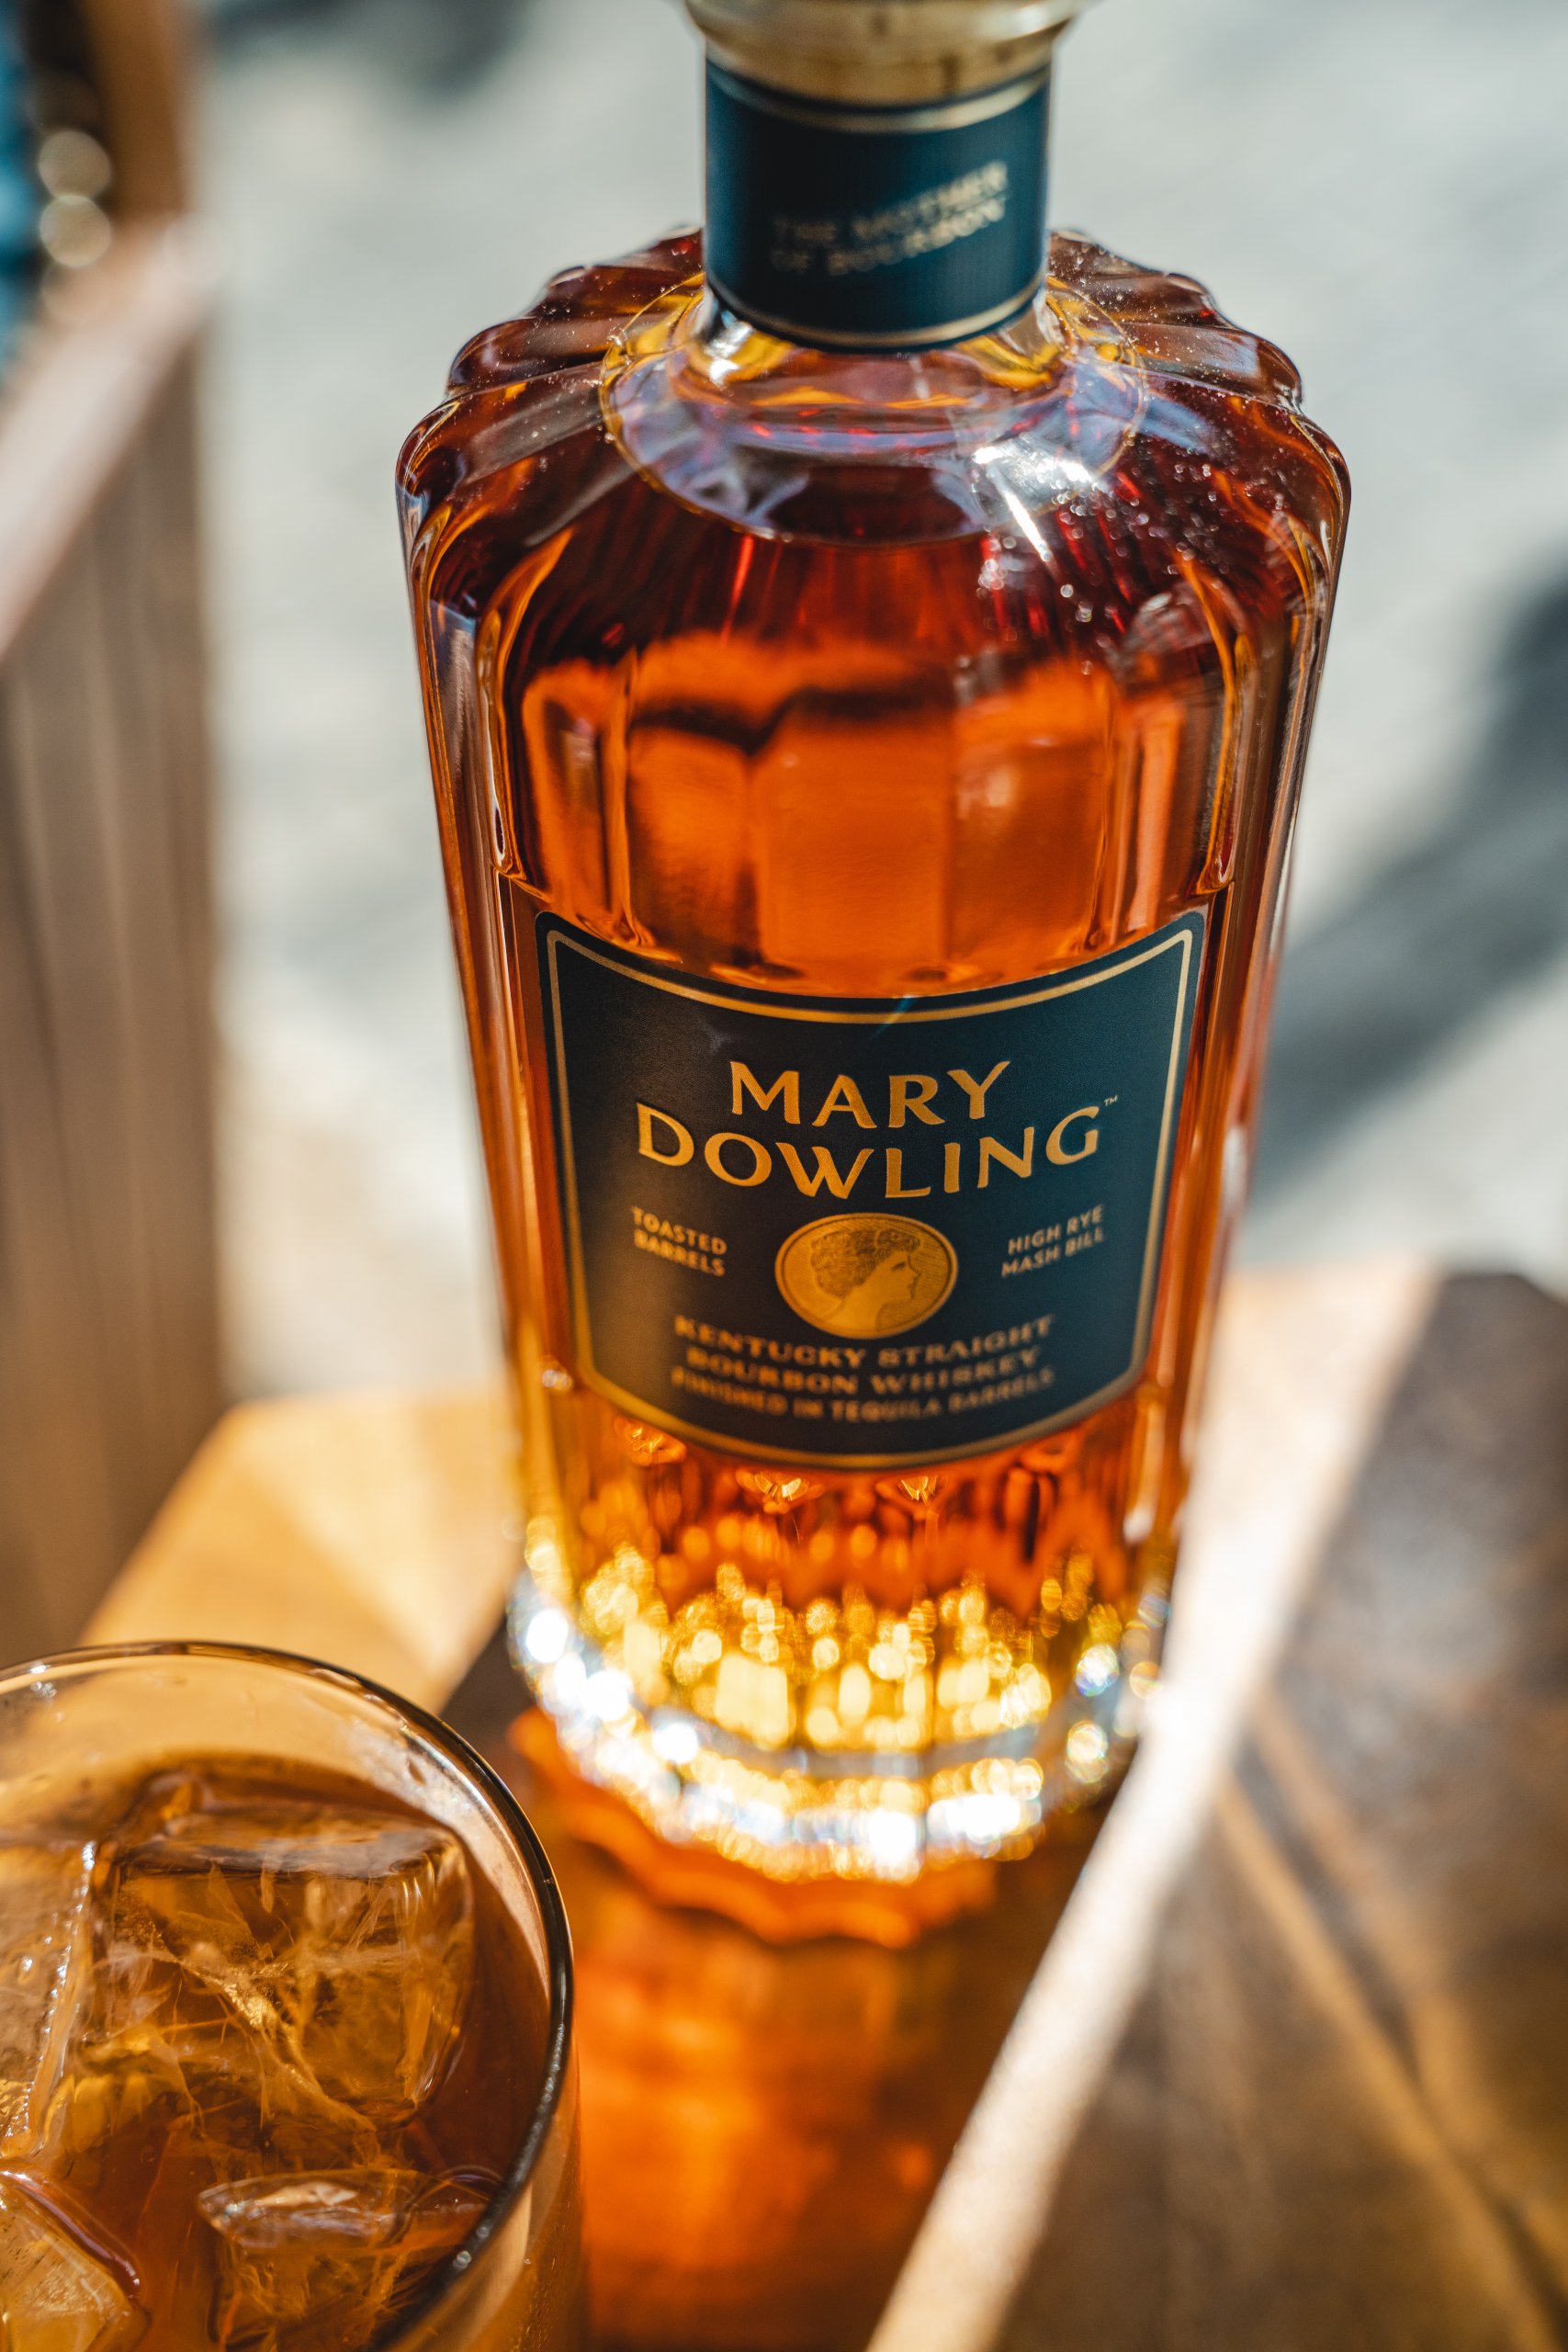 Mary Dowling Tequila Barrel Finish Bourbon. Image courtesy Mary Dowling Whiskey Co.